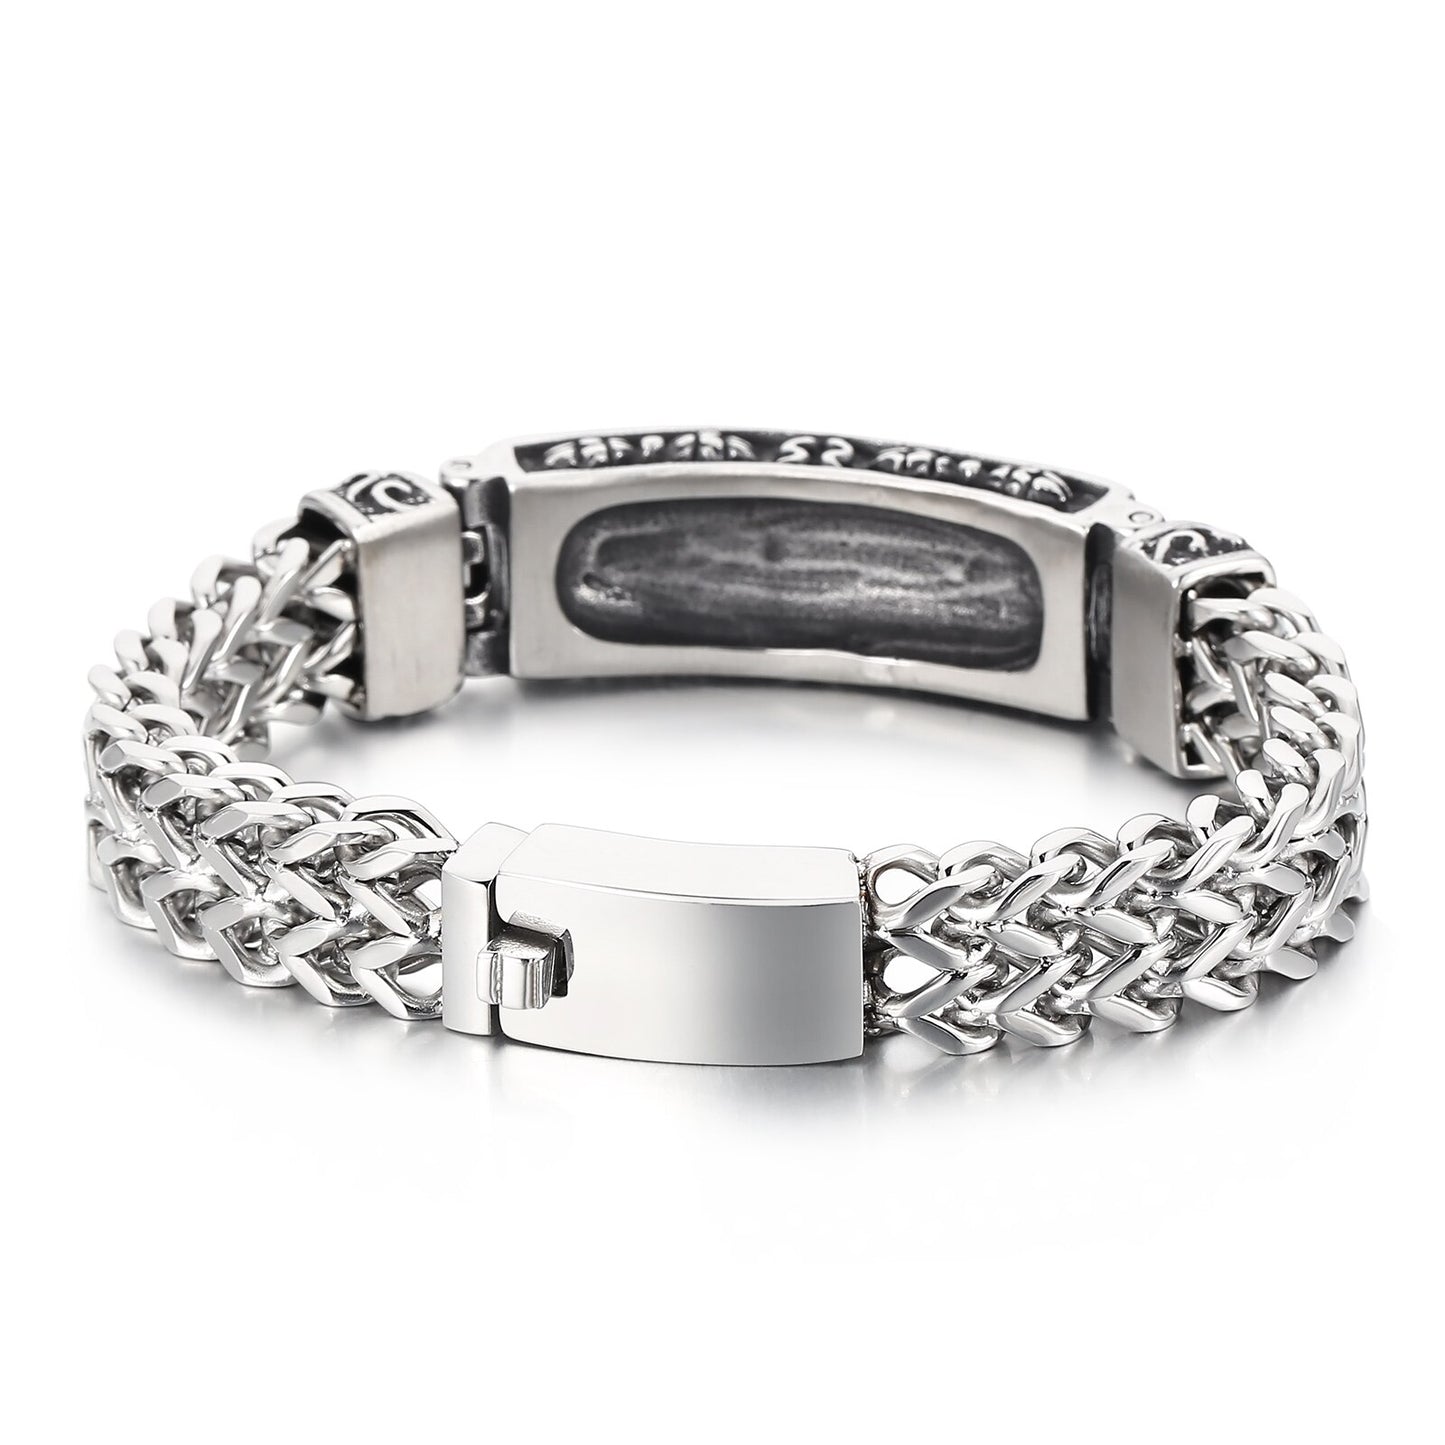 Vintage Viking Pattern Charm Bracelet for Men Stainless Steel Mesh Chain Matte Black Cool Bangle Jewelry